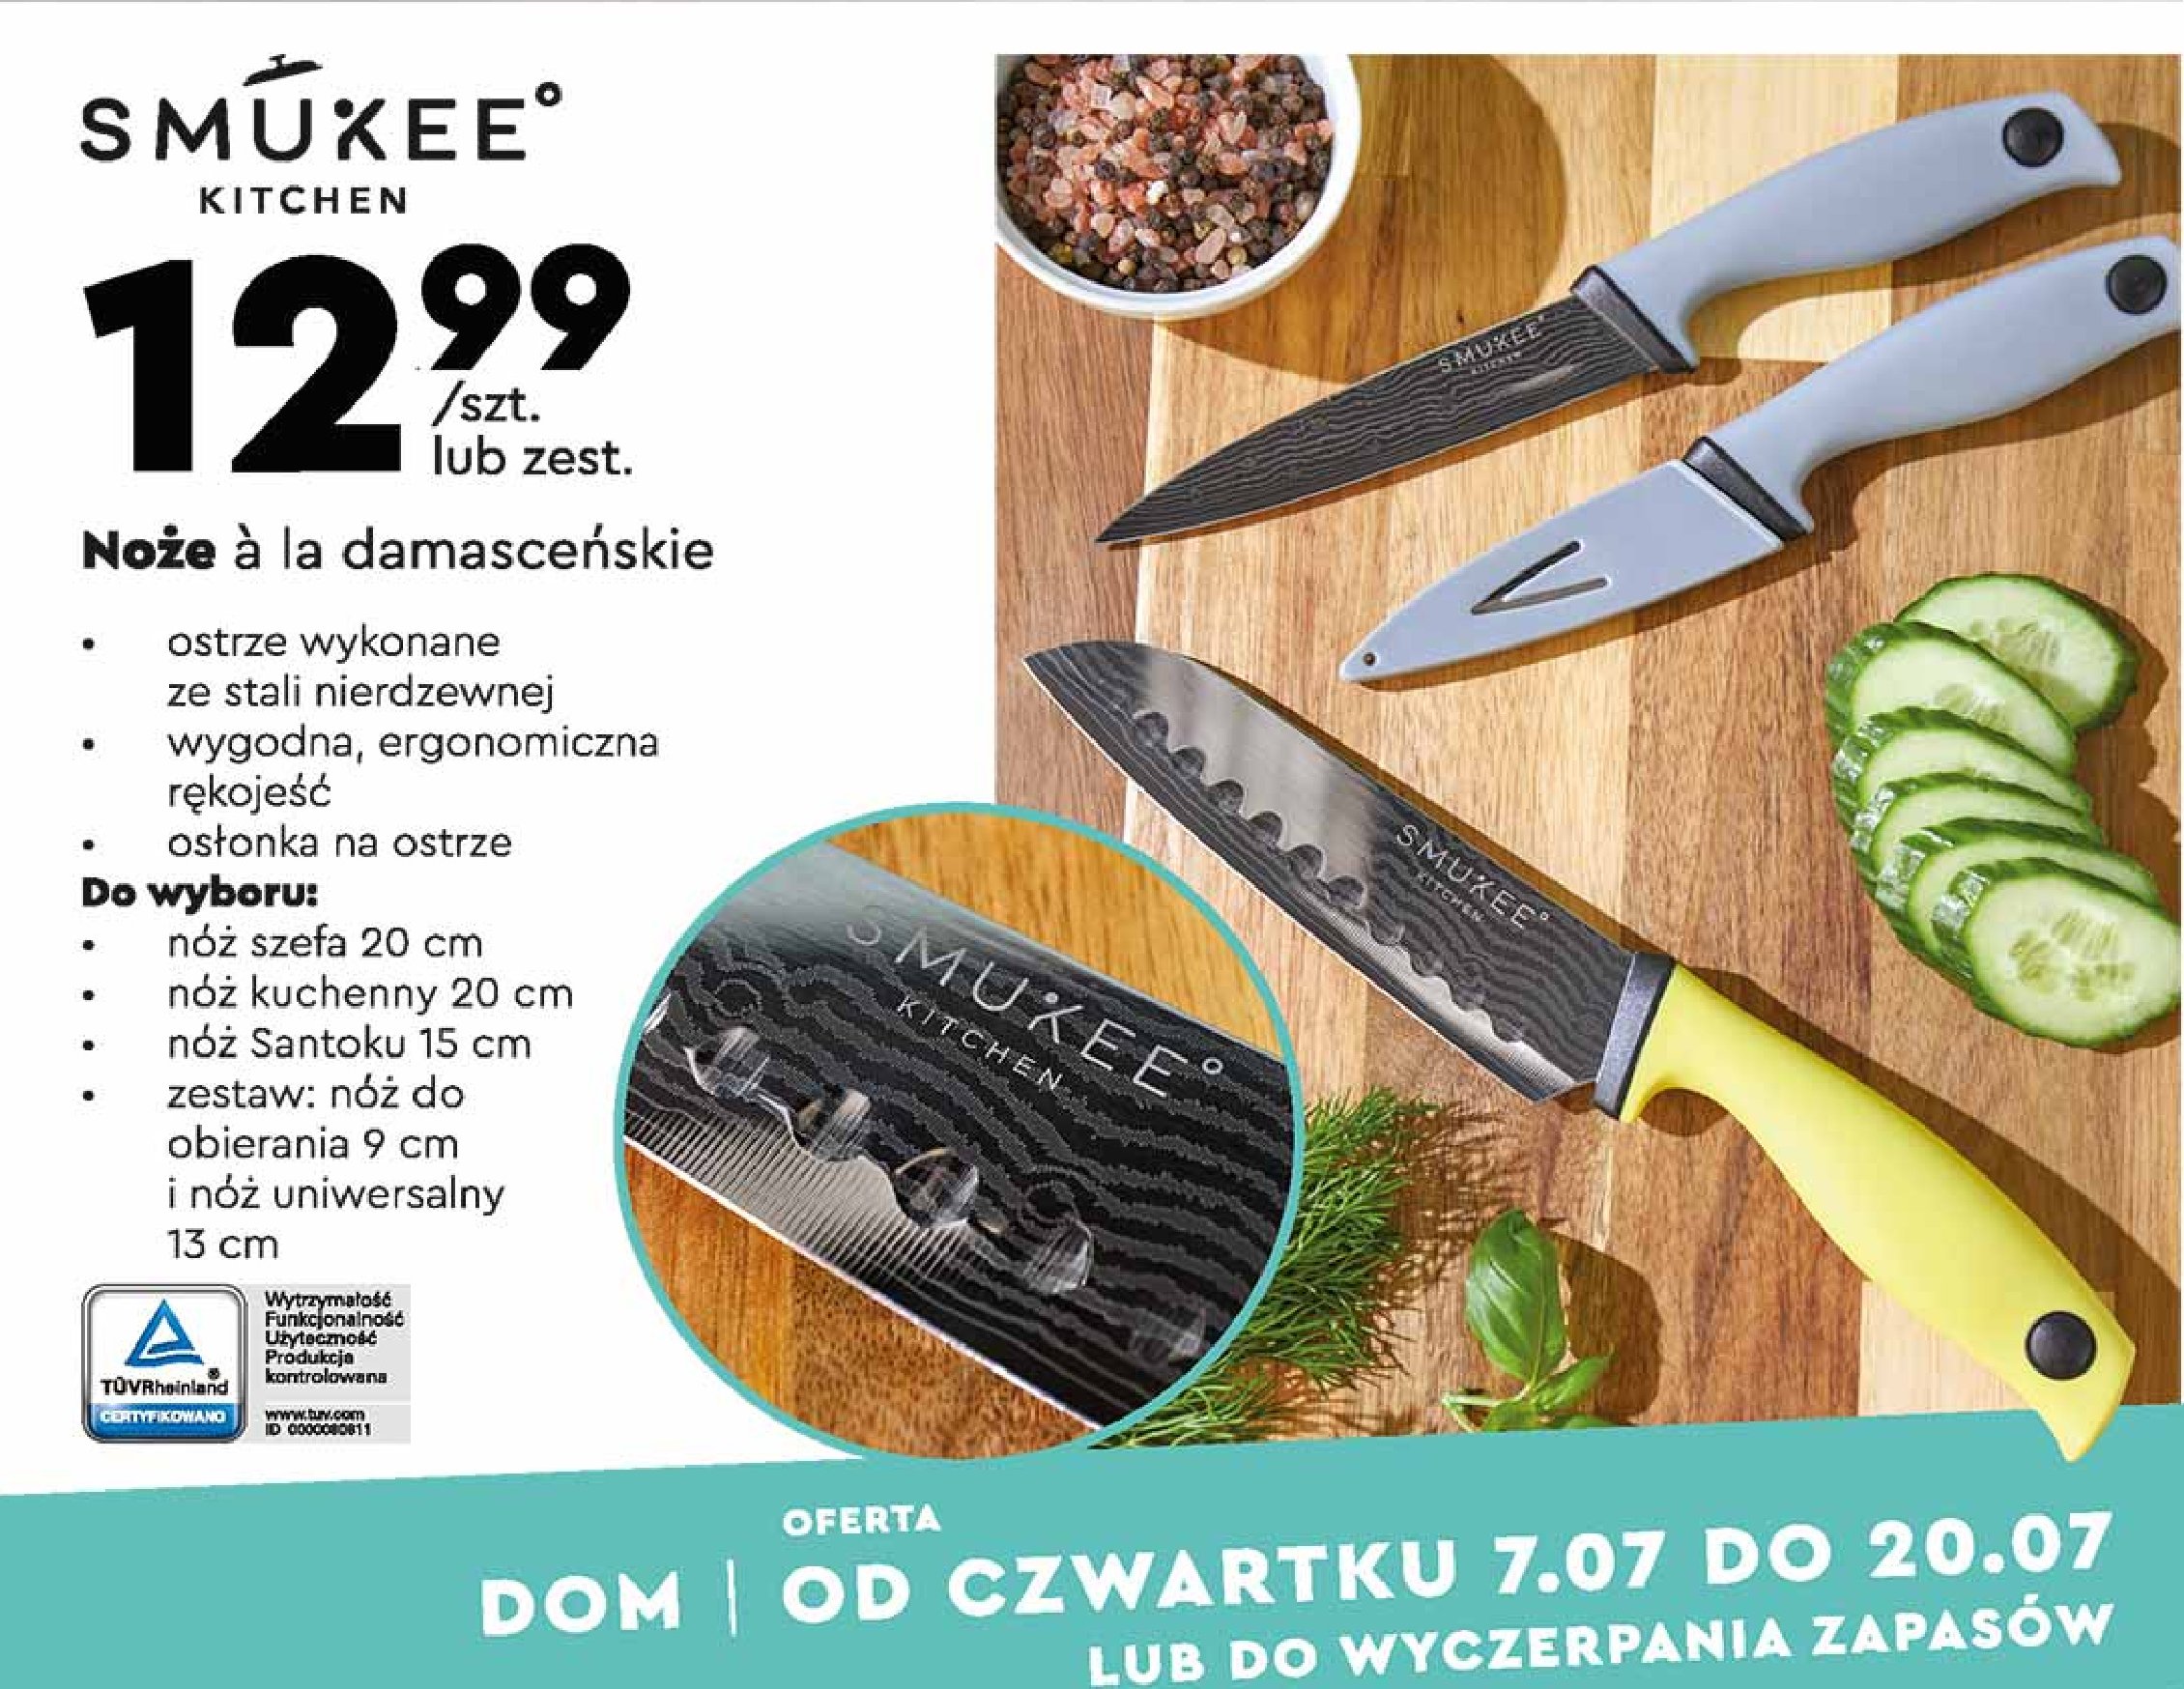 Nóż do obierania 9 cm + nóż uniwersalny 13 cm ala damasceński Smukee kitchen promocja